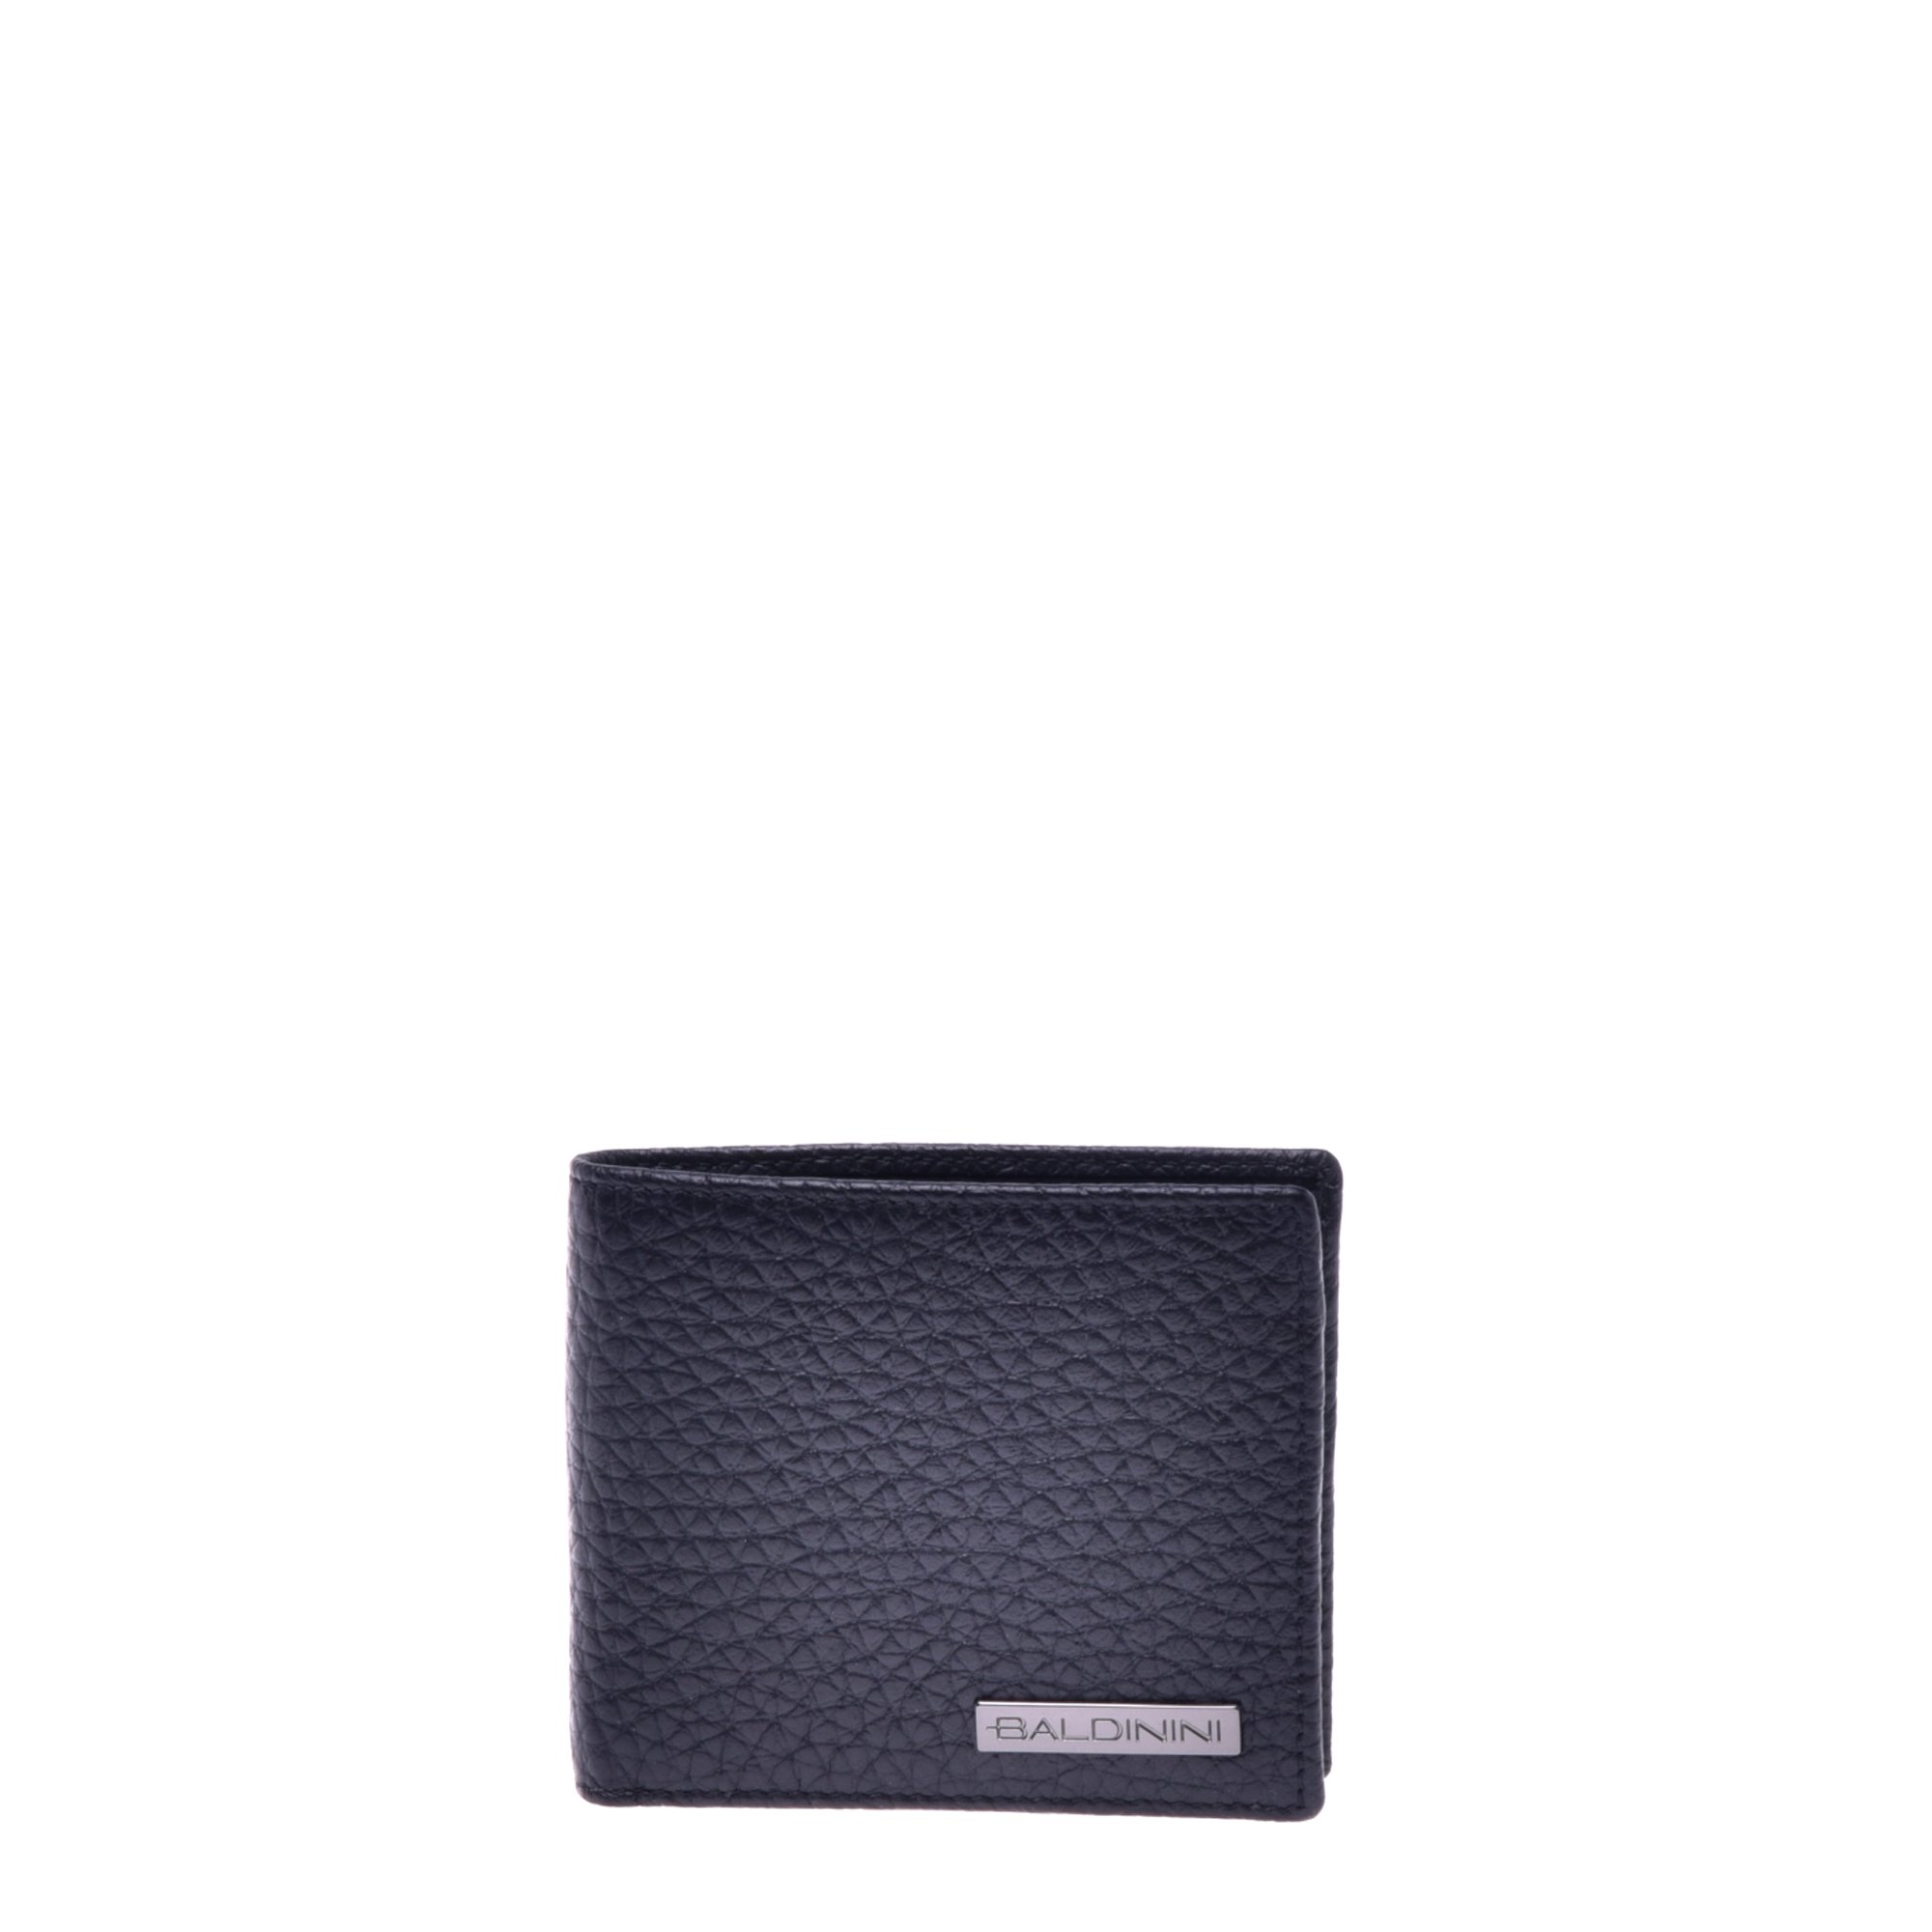 Black tumbled leather wallet image